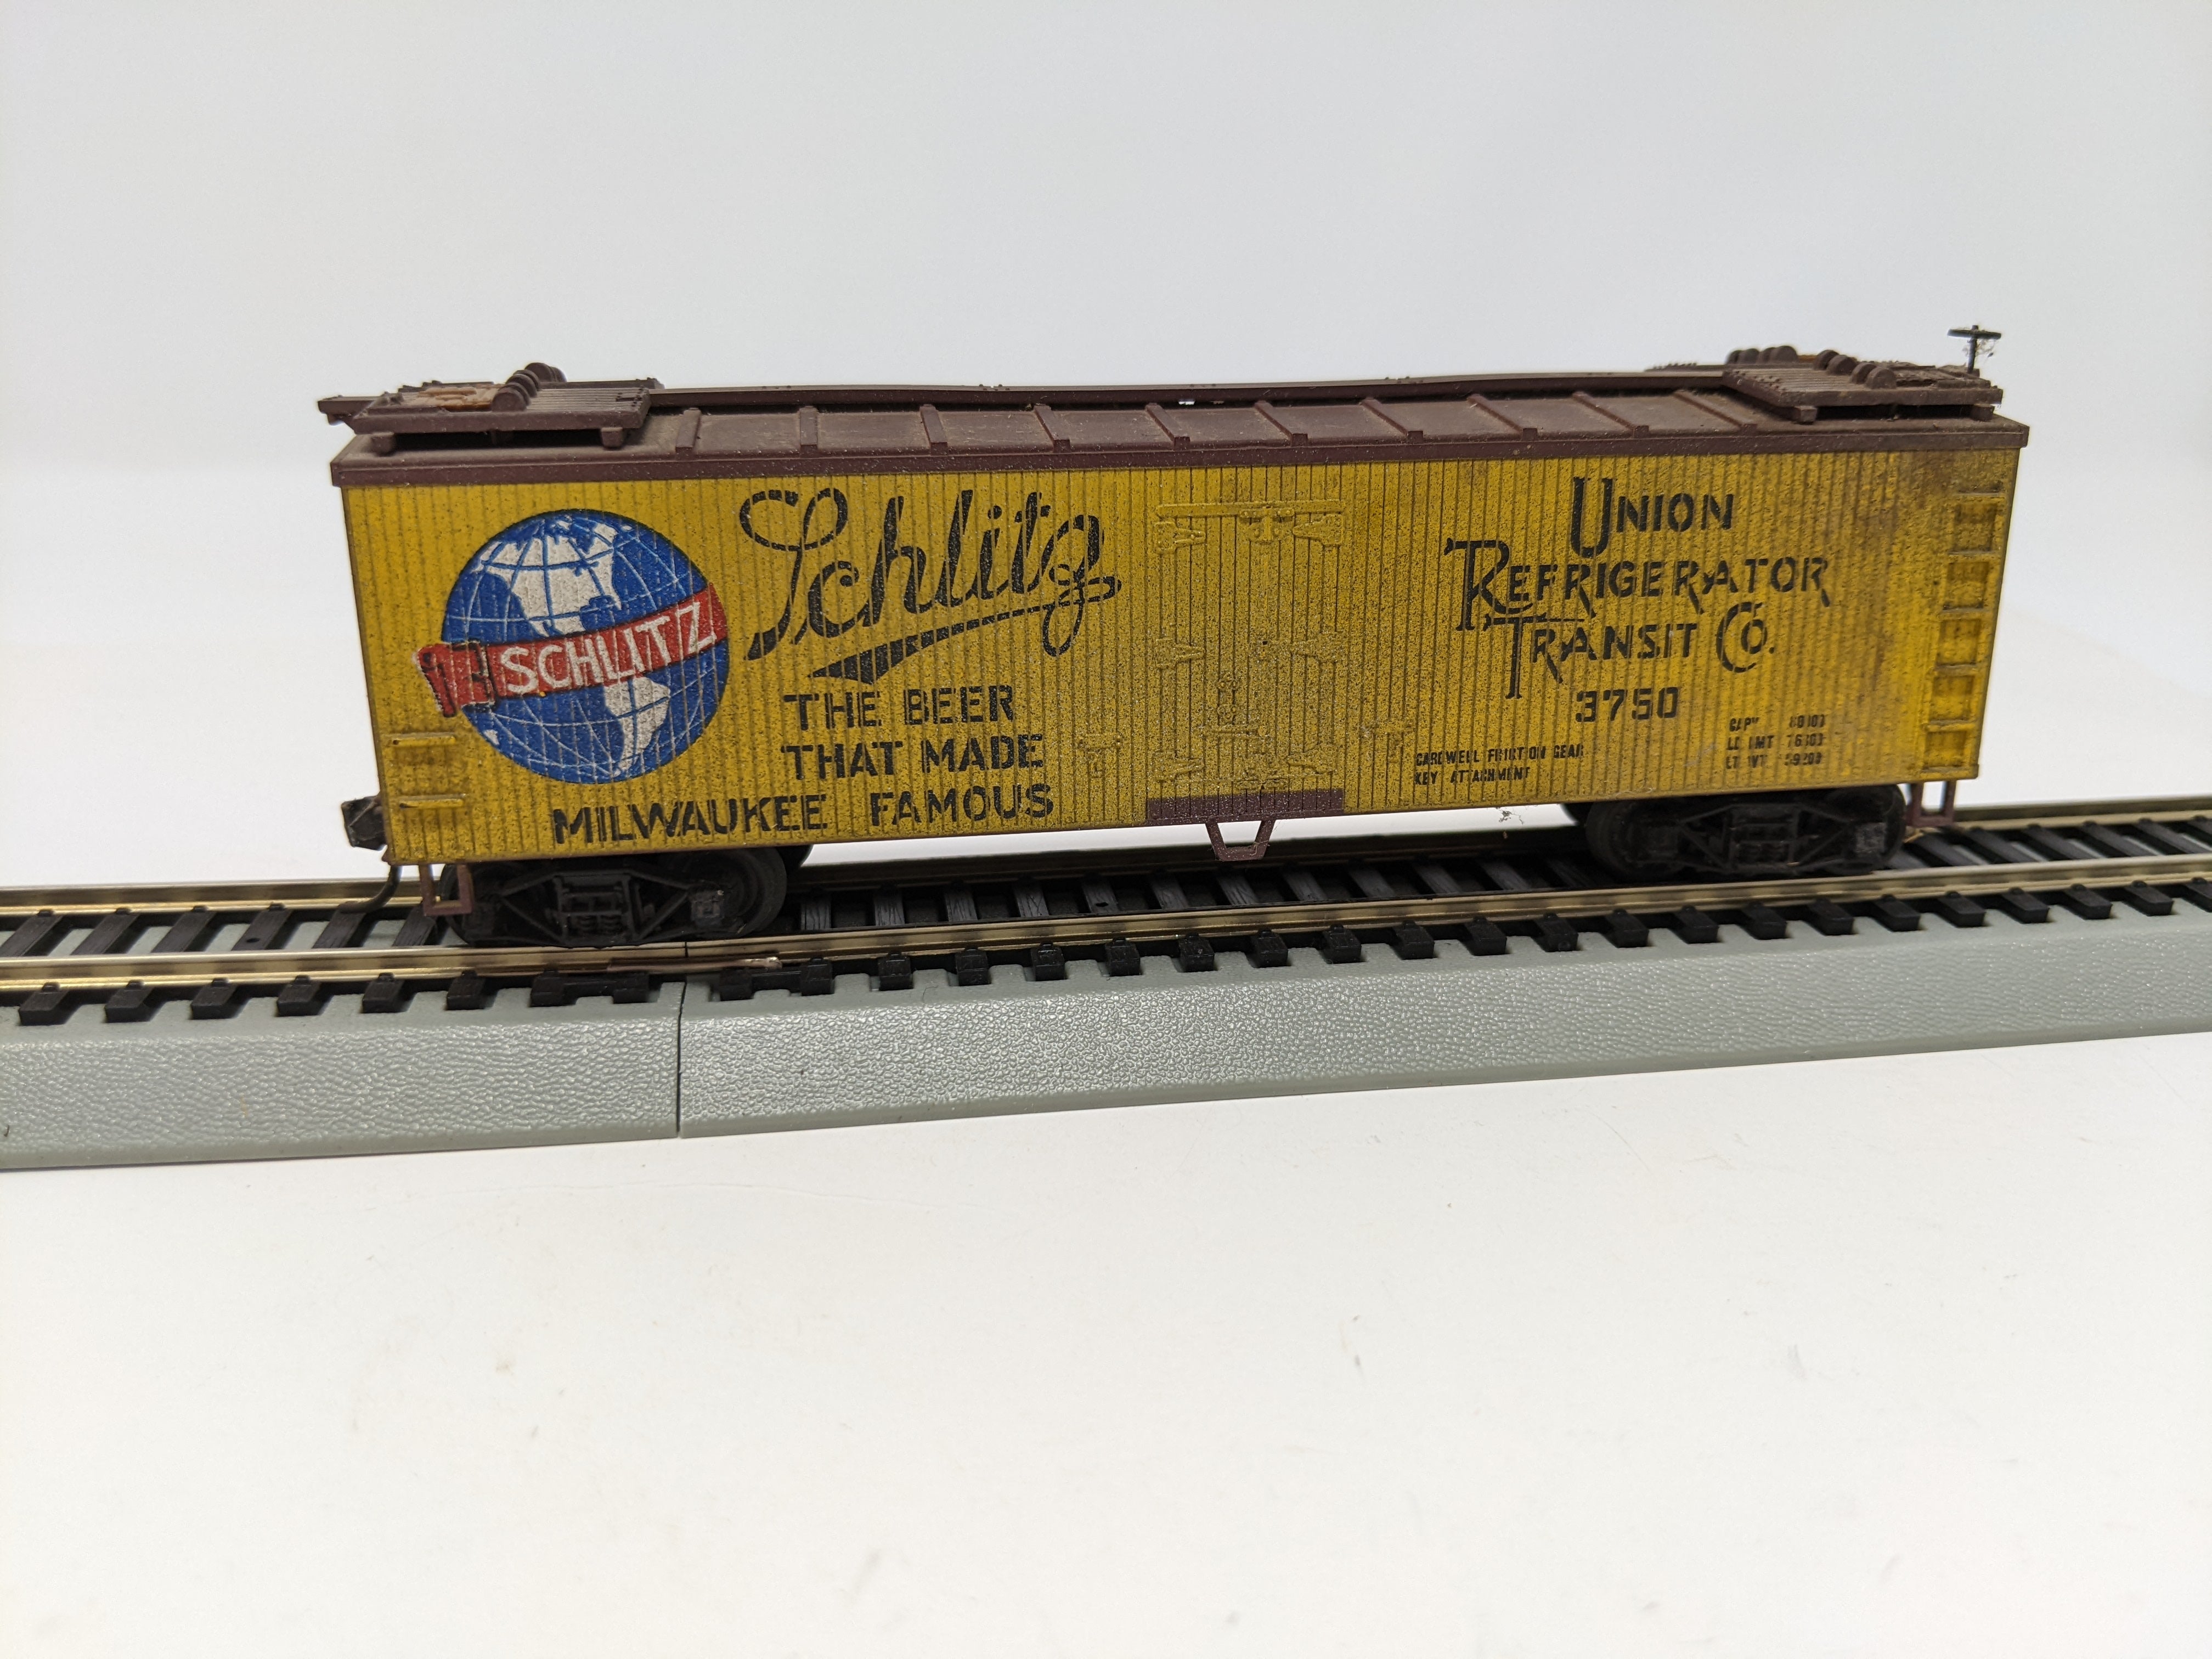 USED HO Scale, 40' Wooden Reefer Box Car, Union Refrigerator Transit URTX #3750, Schlitz Beer Car, Read Description